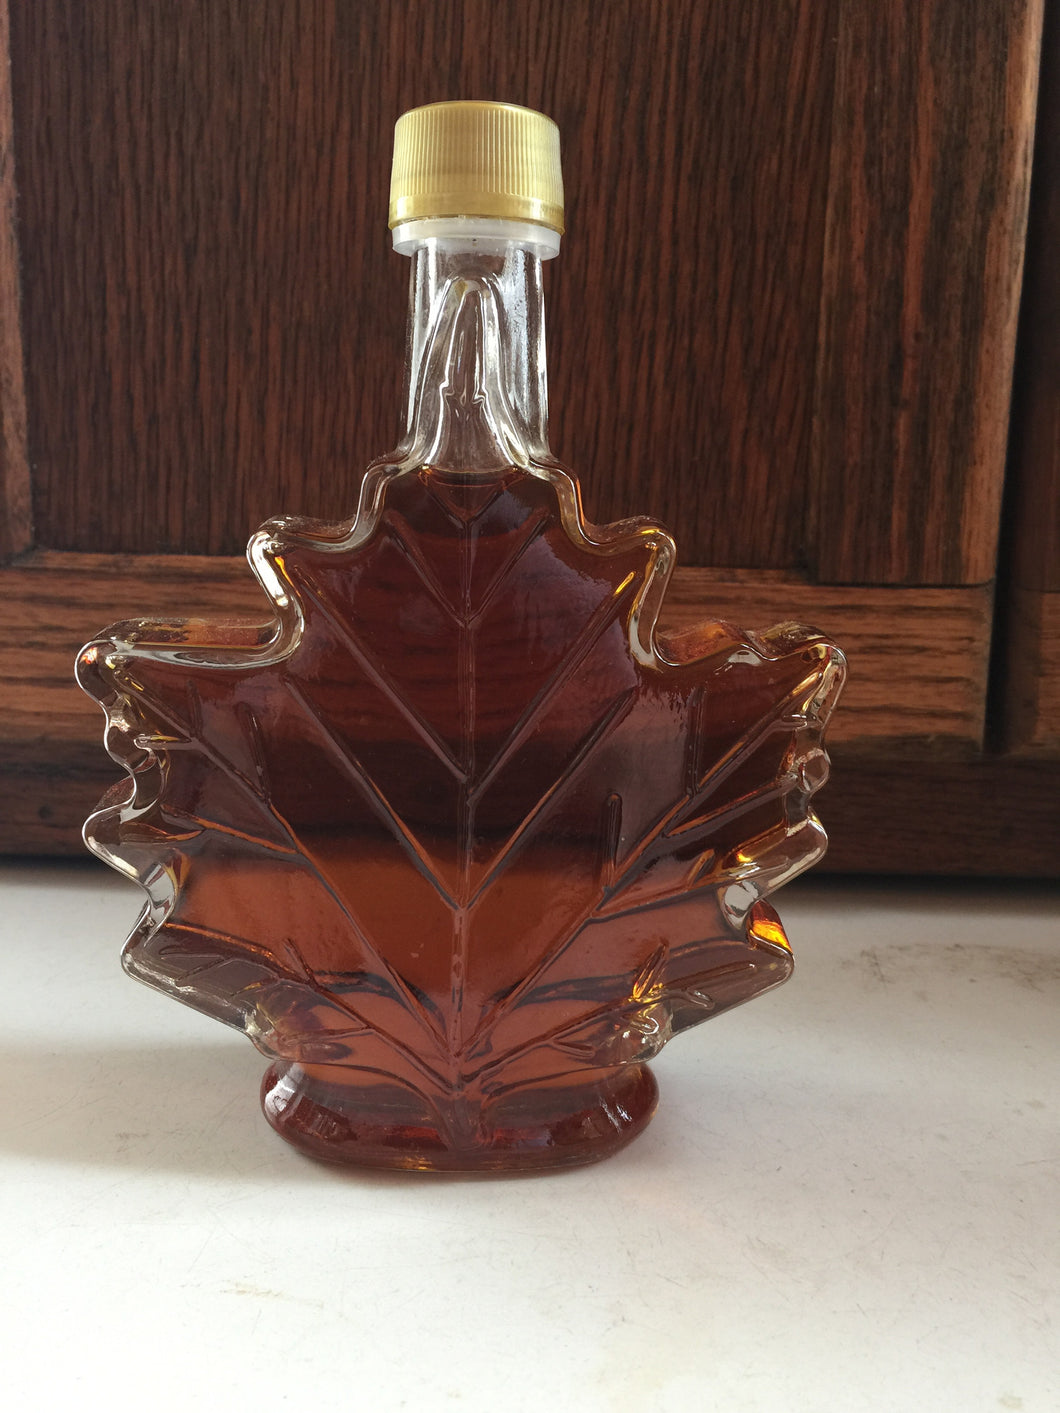 Pure Maple Syrup - 8.45 oz Leaf